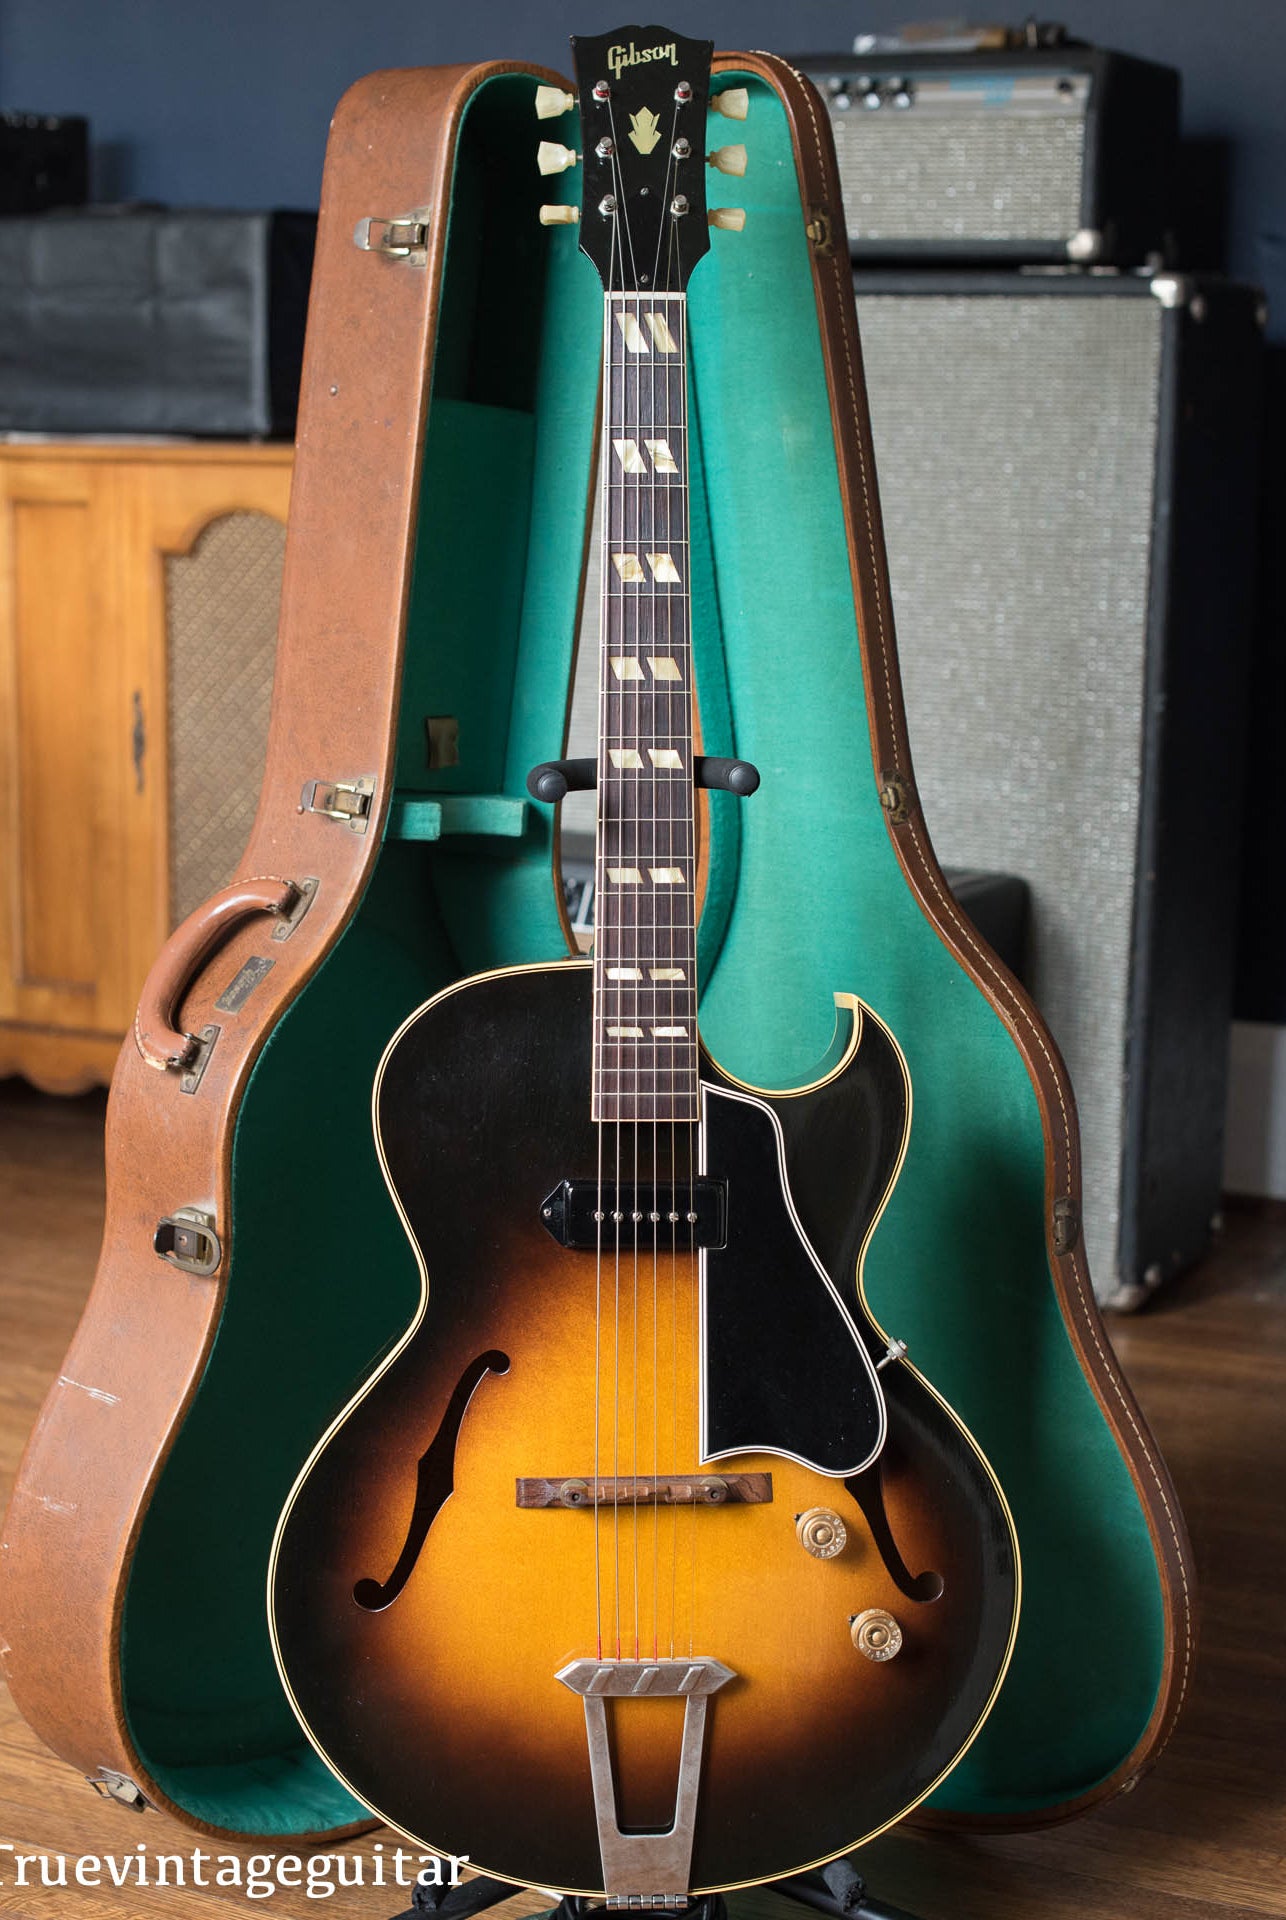 Vintage 1951 Gibson ES-175 archtop electric guitar